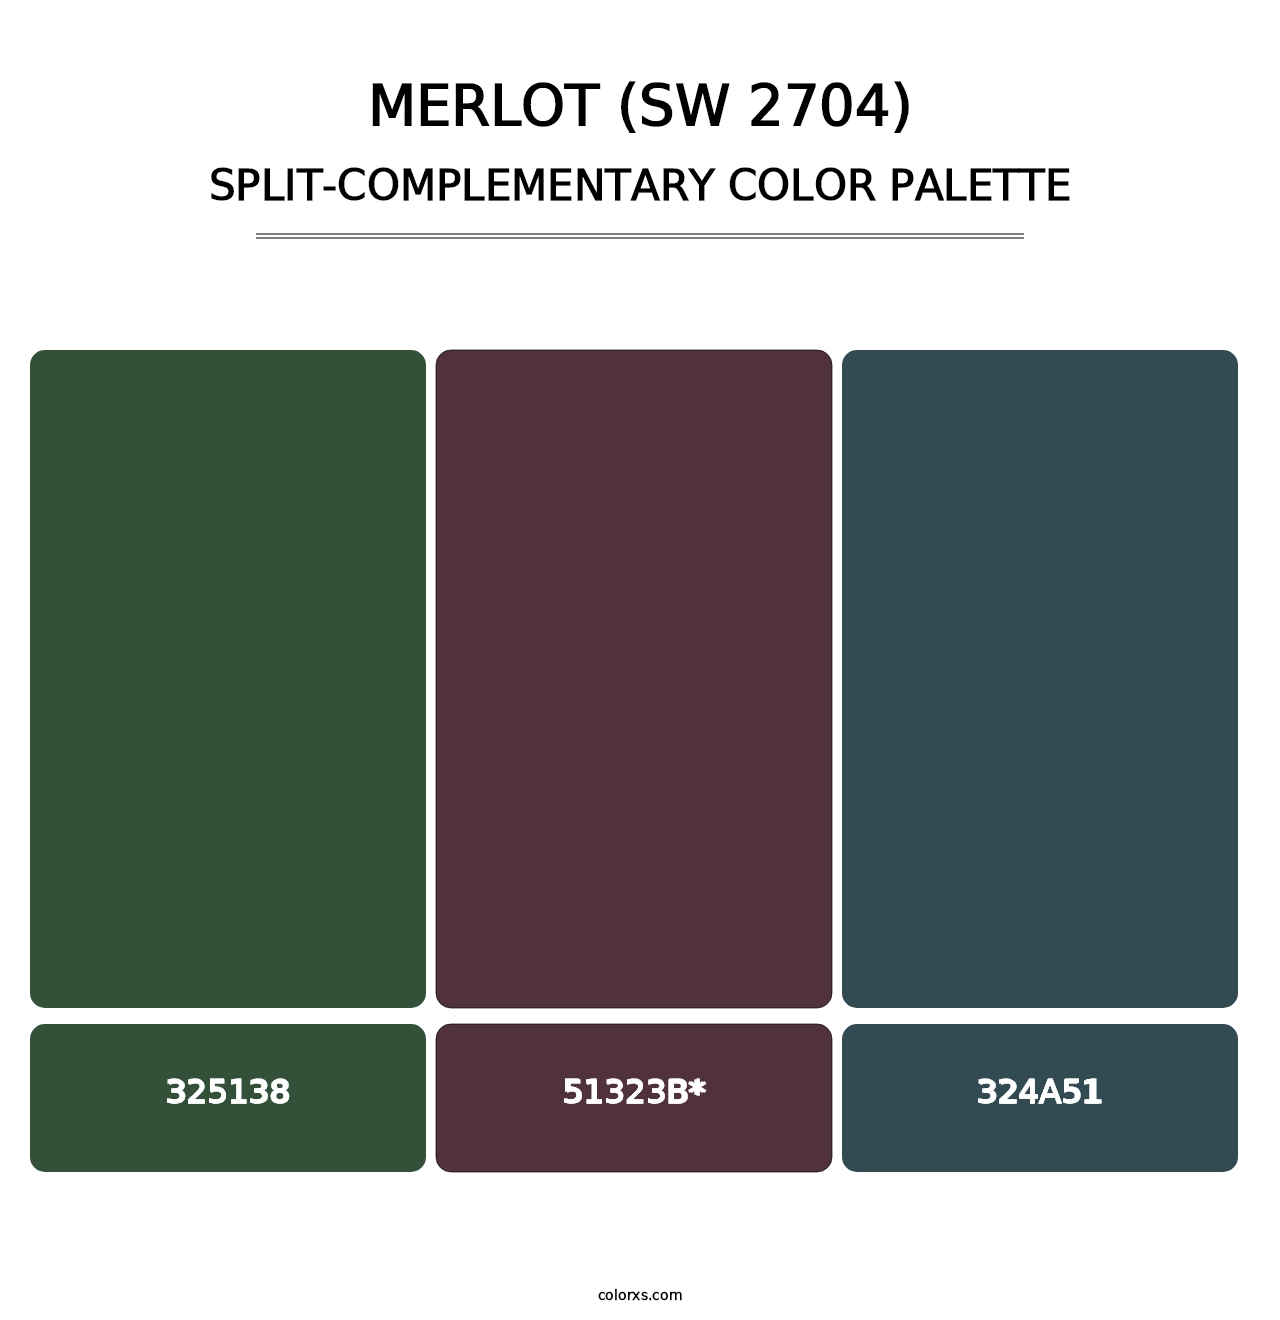 Merlot (SW 2704) - Split-Complementary Color Palette